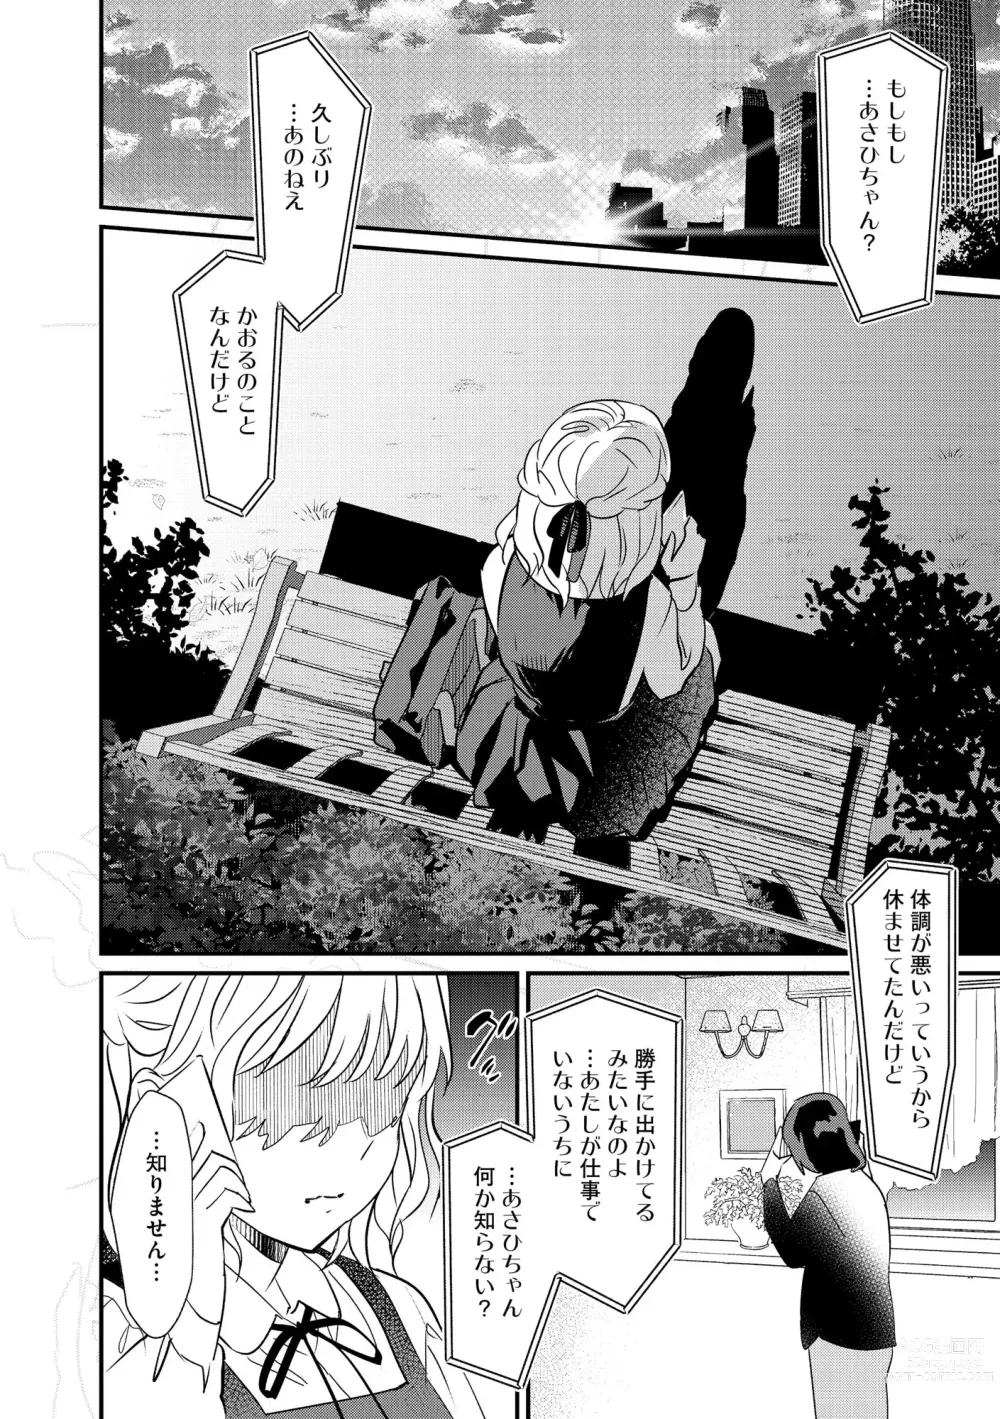 Page 20 of manga Cyberia Plus Vol. 14